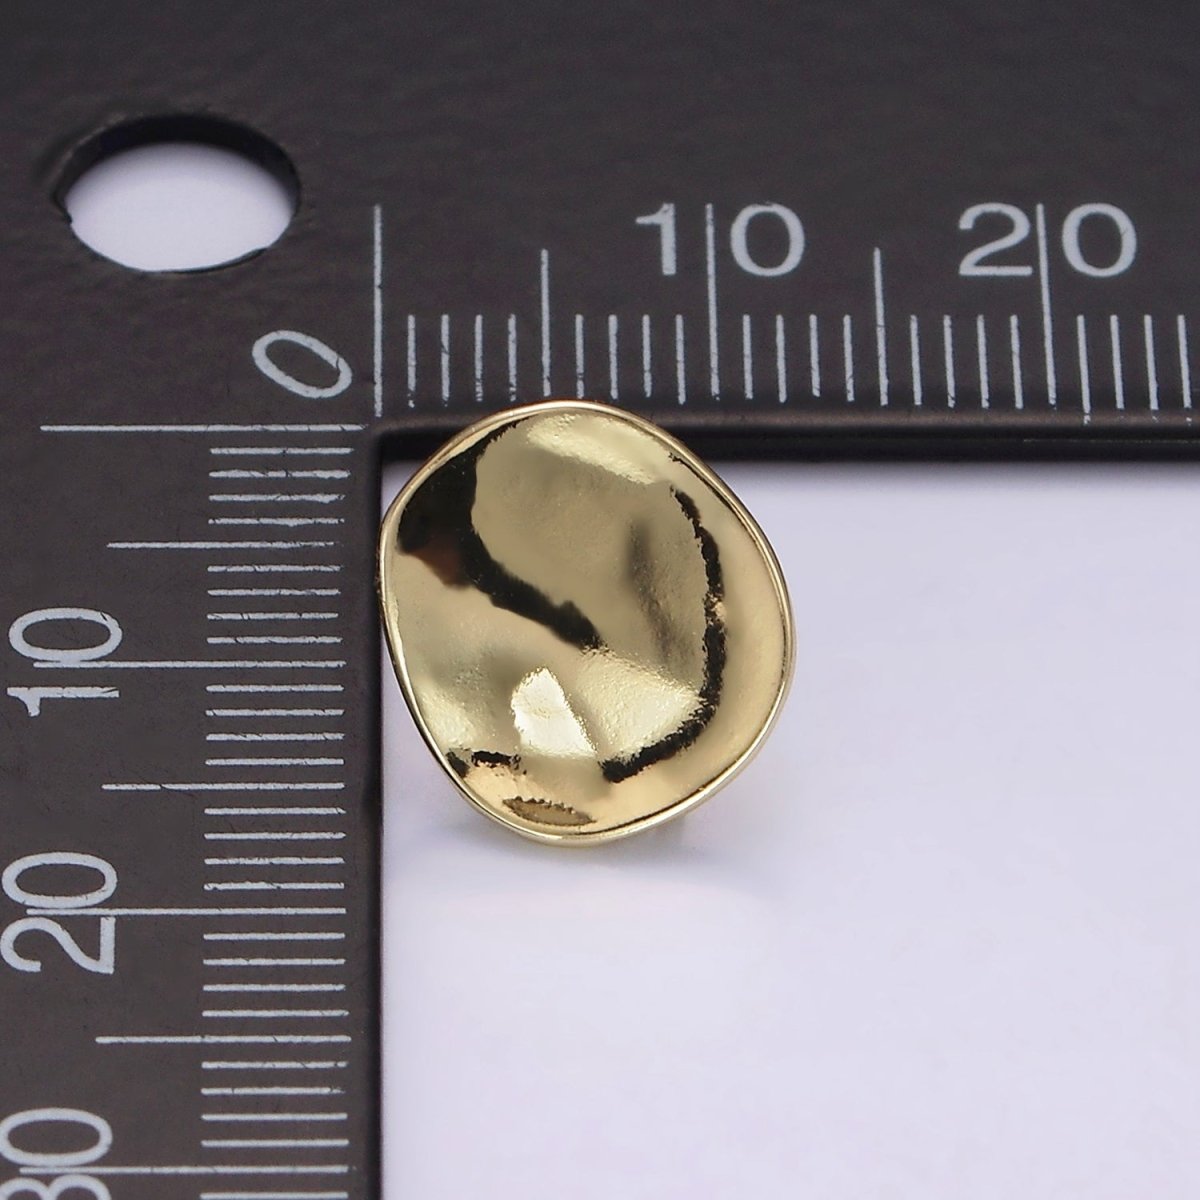 14K Gold Filled Dented Geometric Rounded Stud Earrings | Z606 - DLUXCA